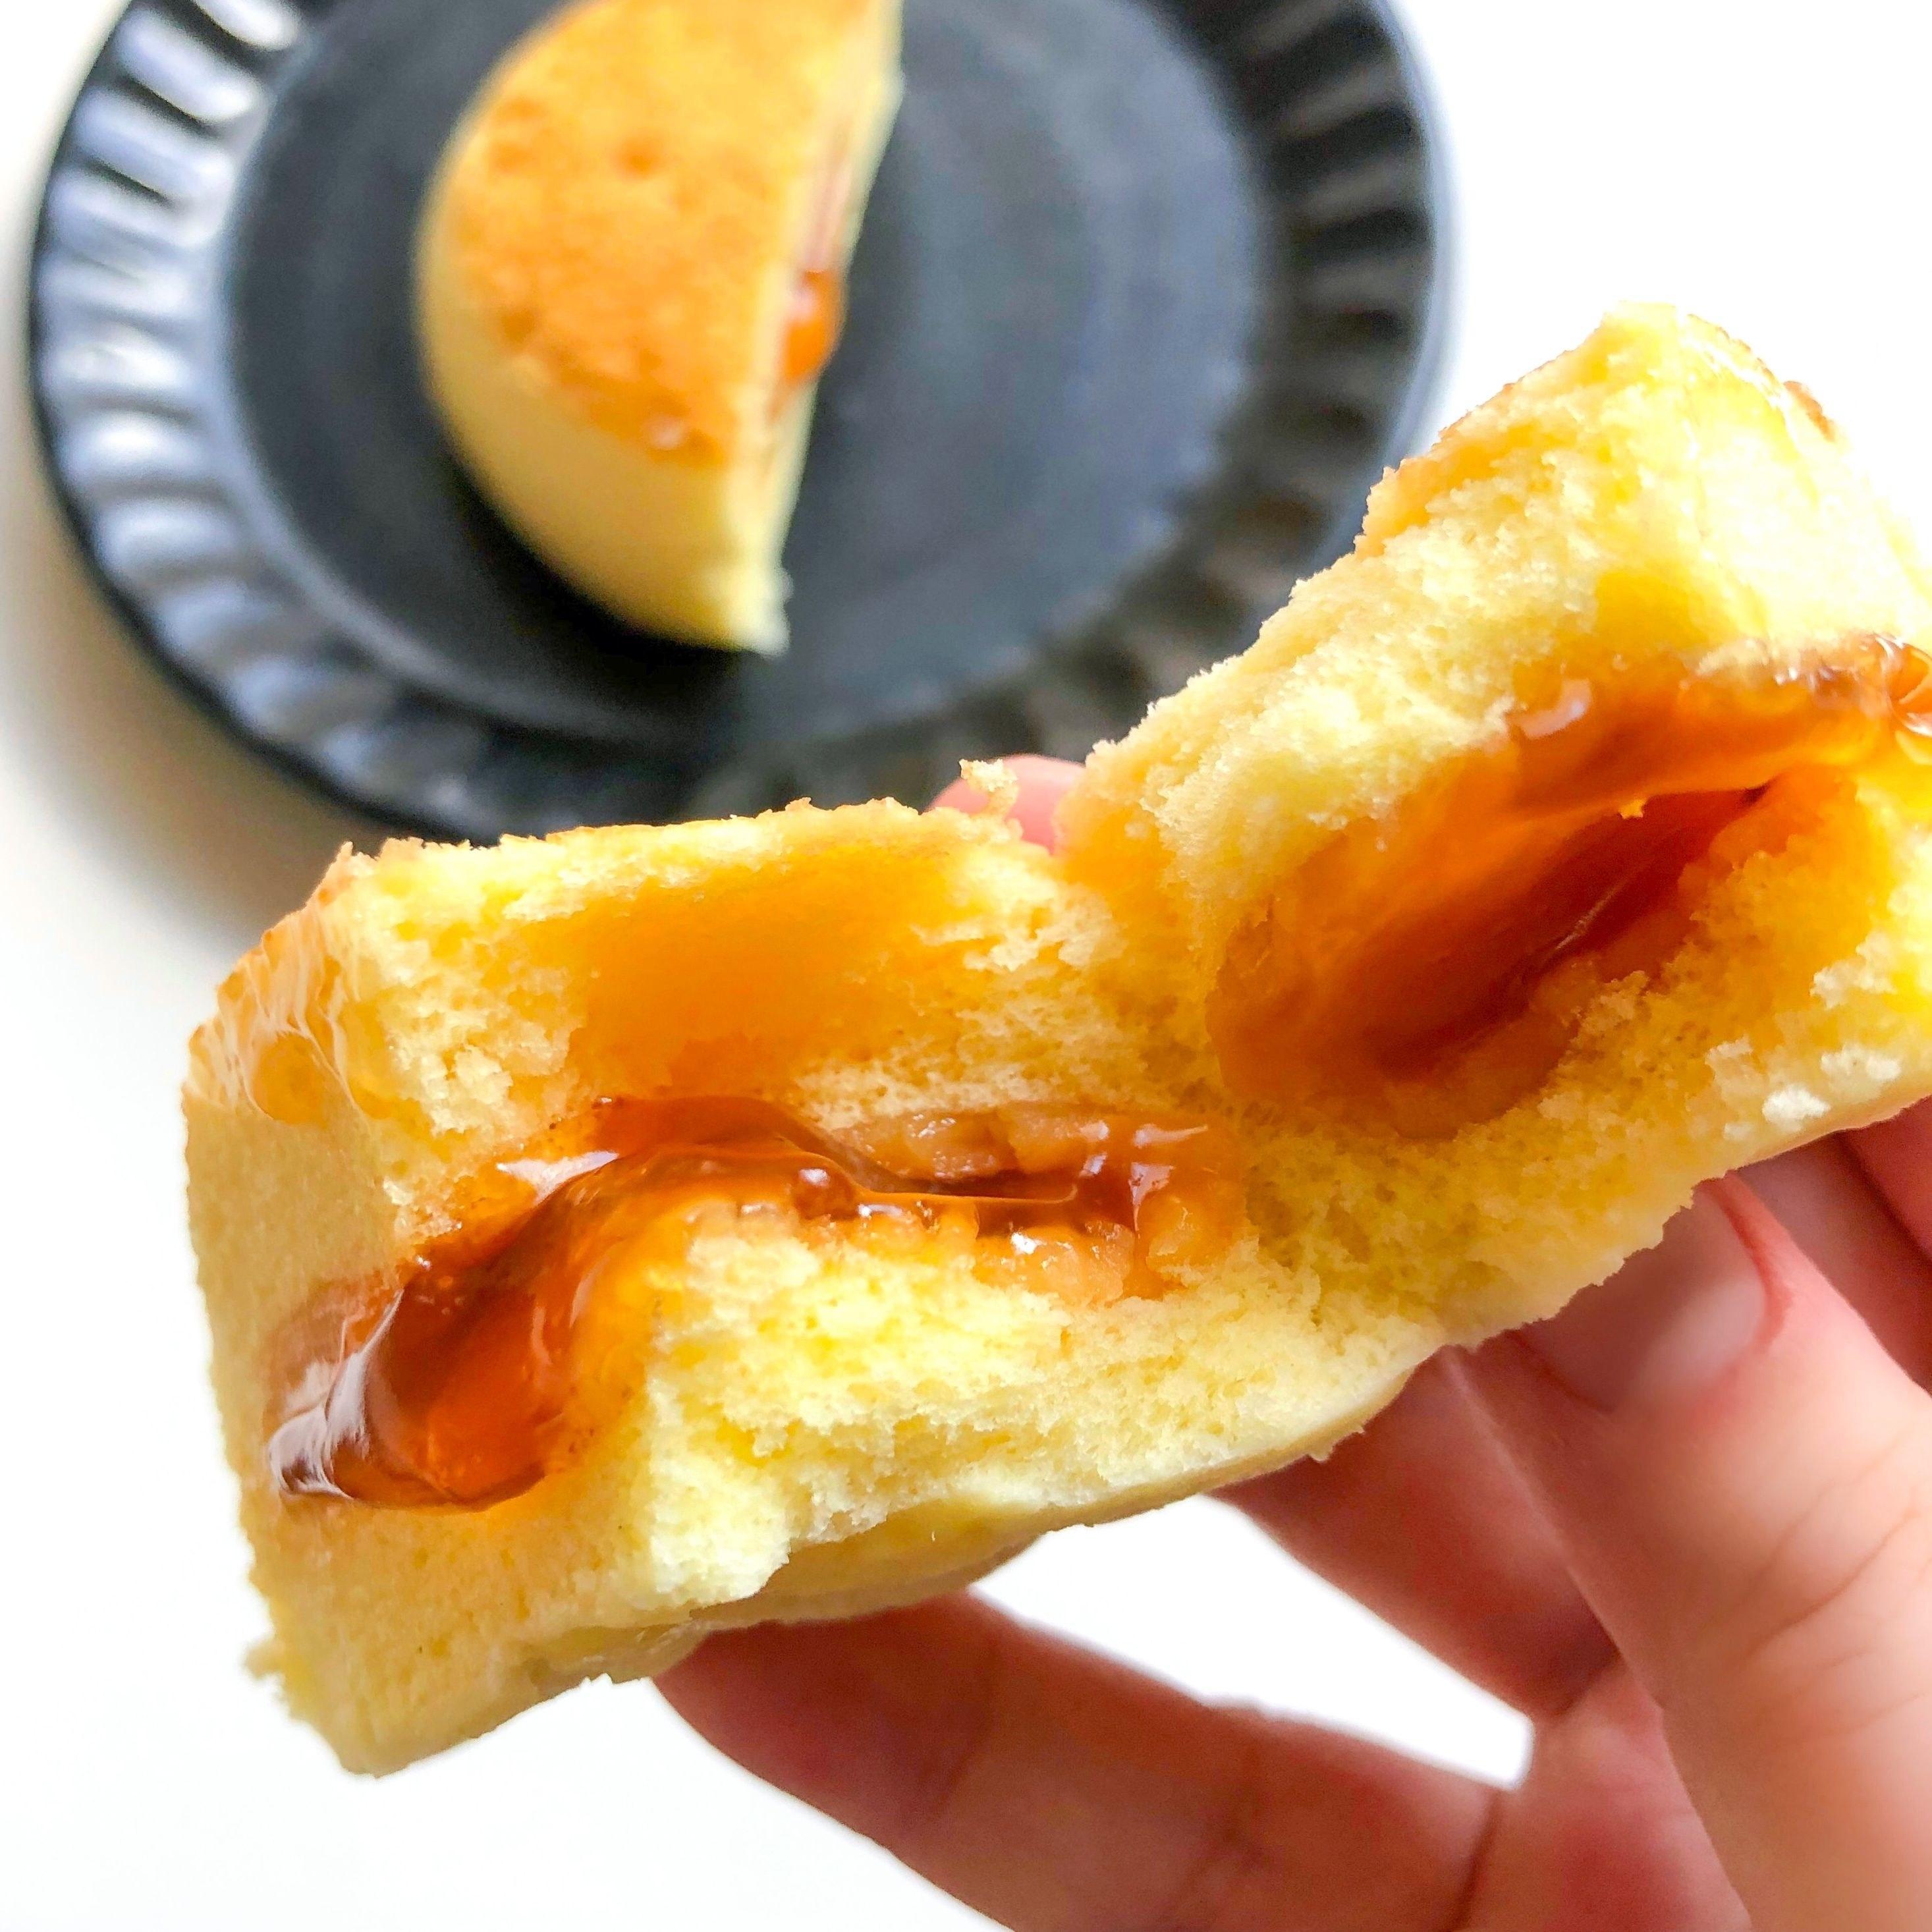 FamilyMart（ファミリーマート）のおすすめパン「森永製菓監修 バター香る ホットケーキまん」